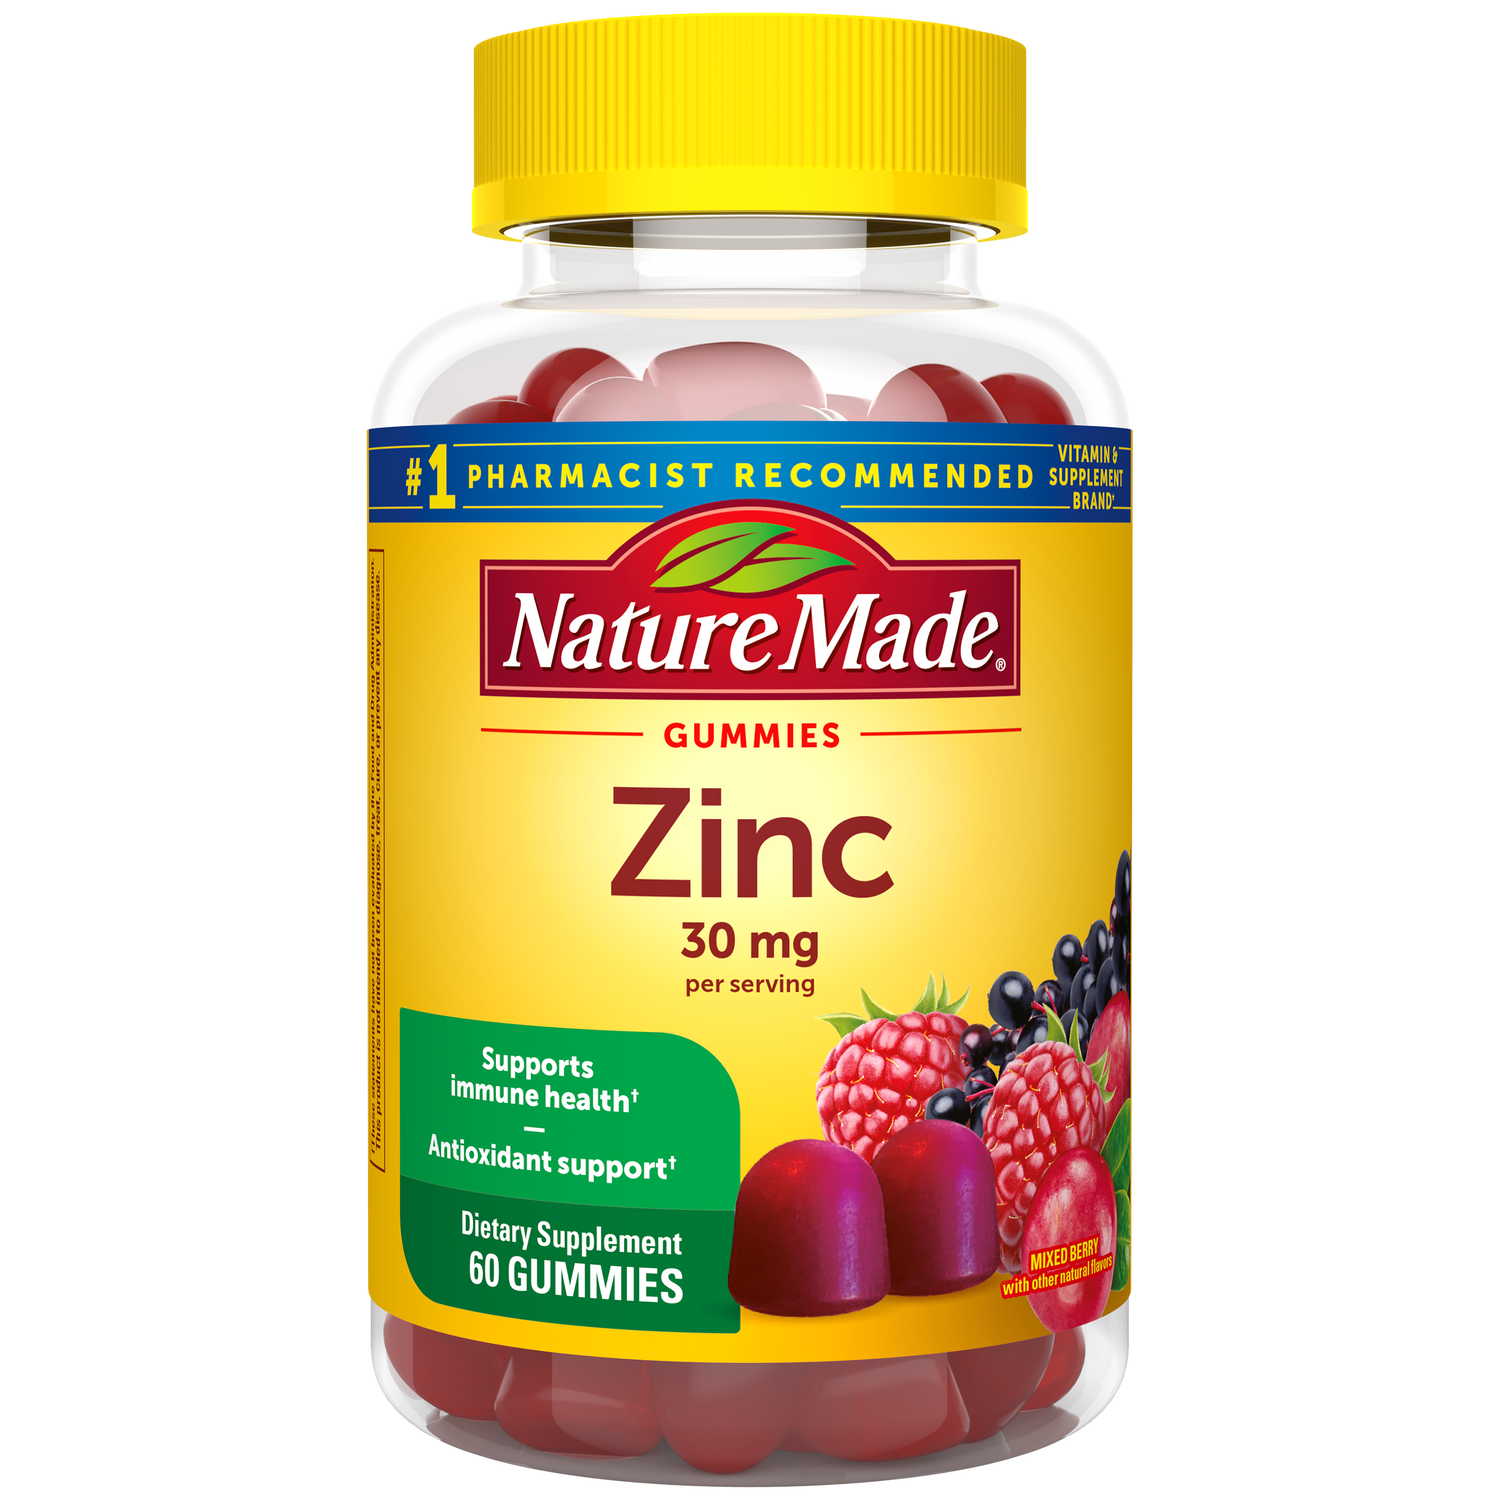 Nature Made Extra Strength Zinc Gummies